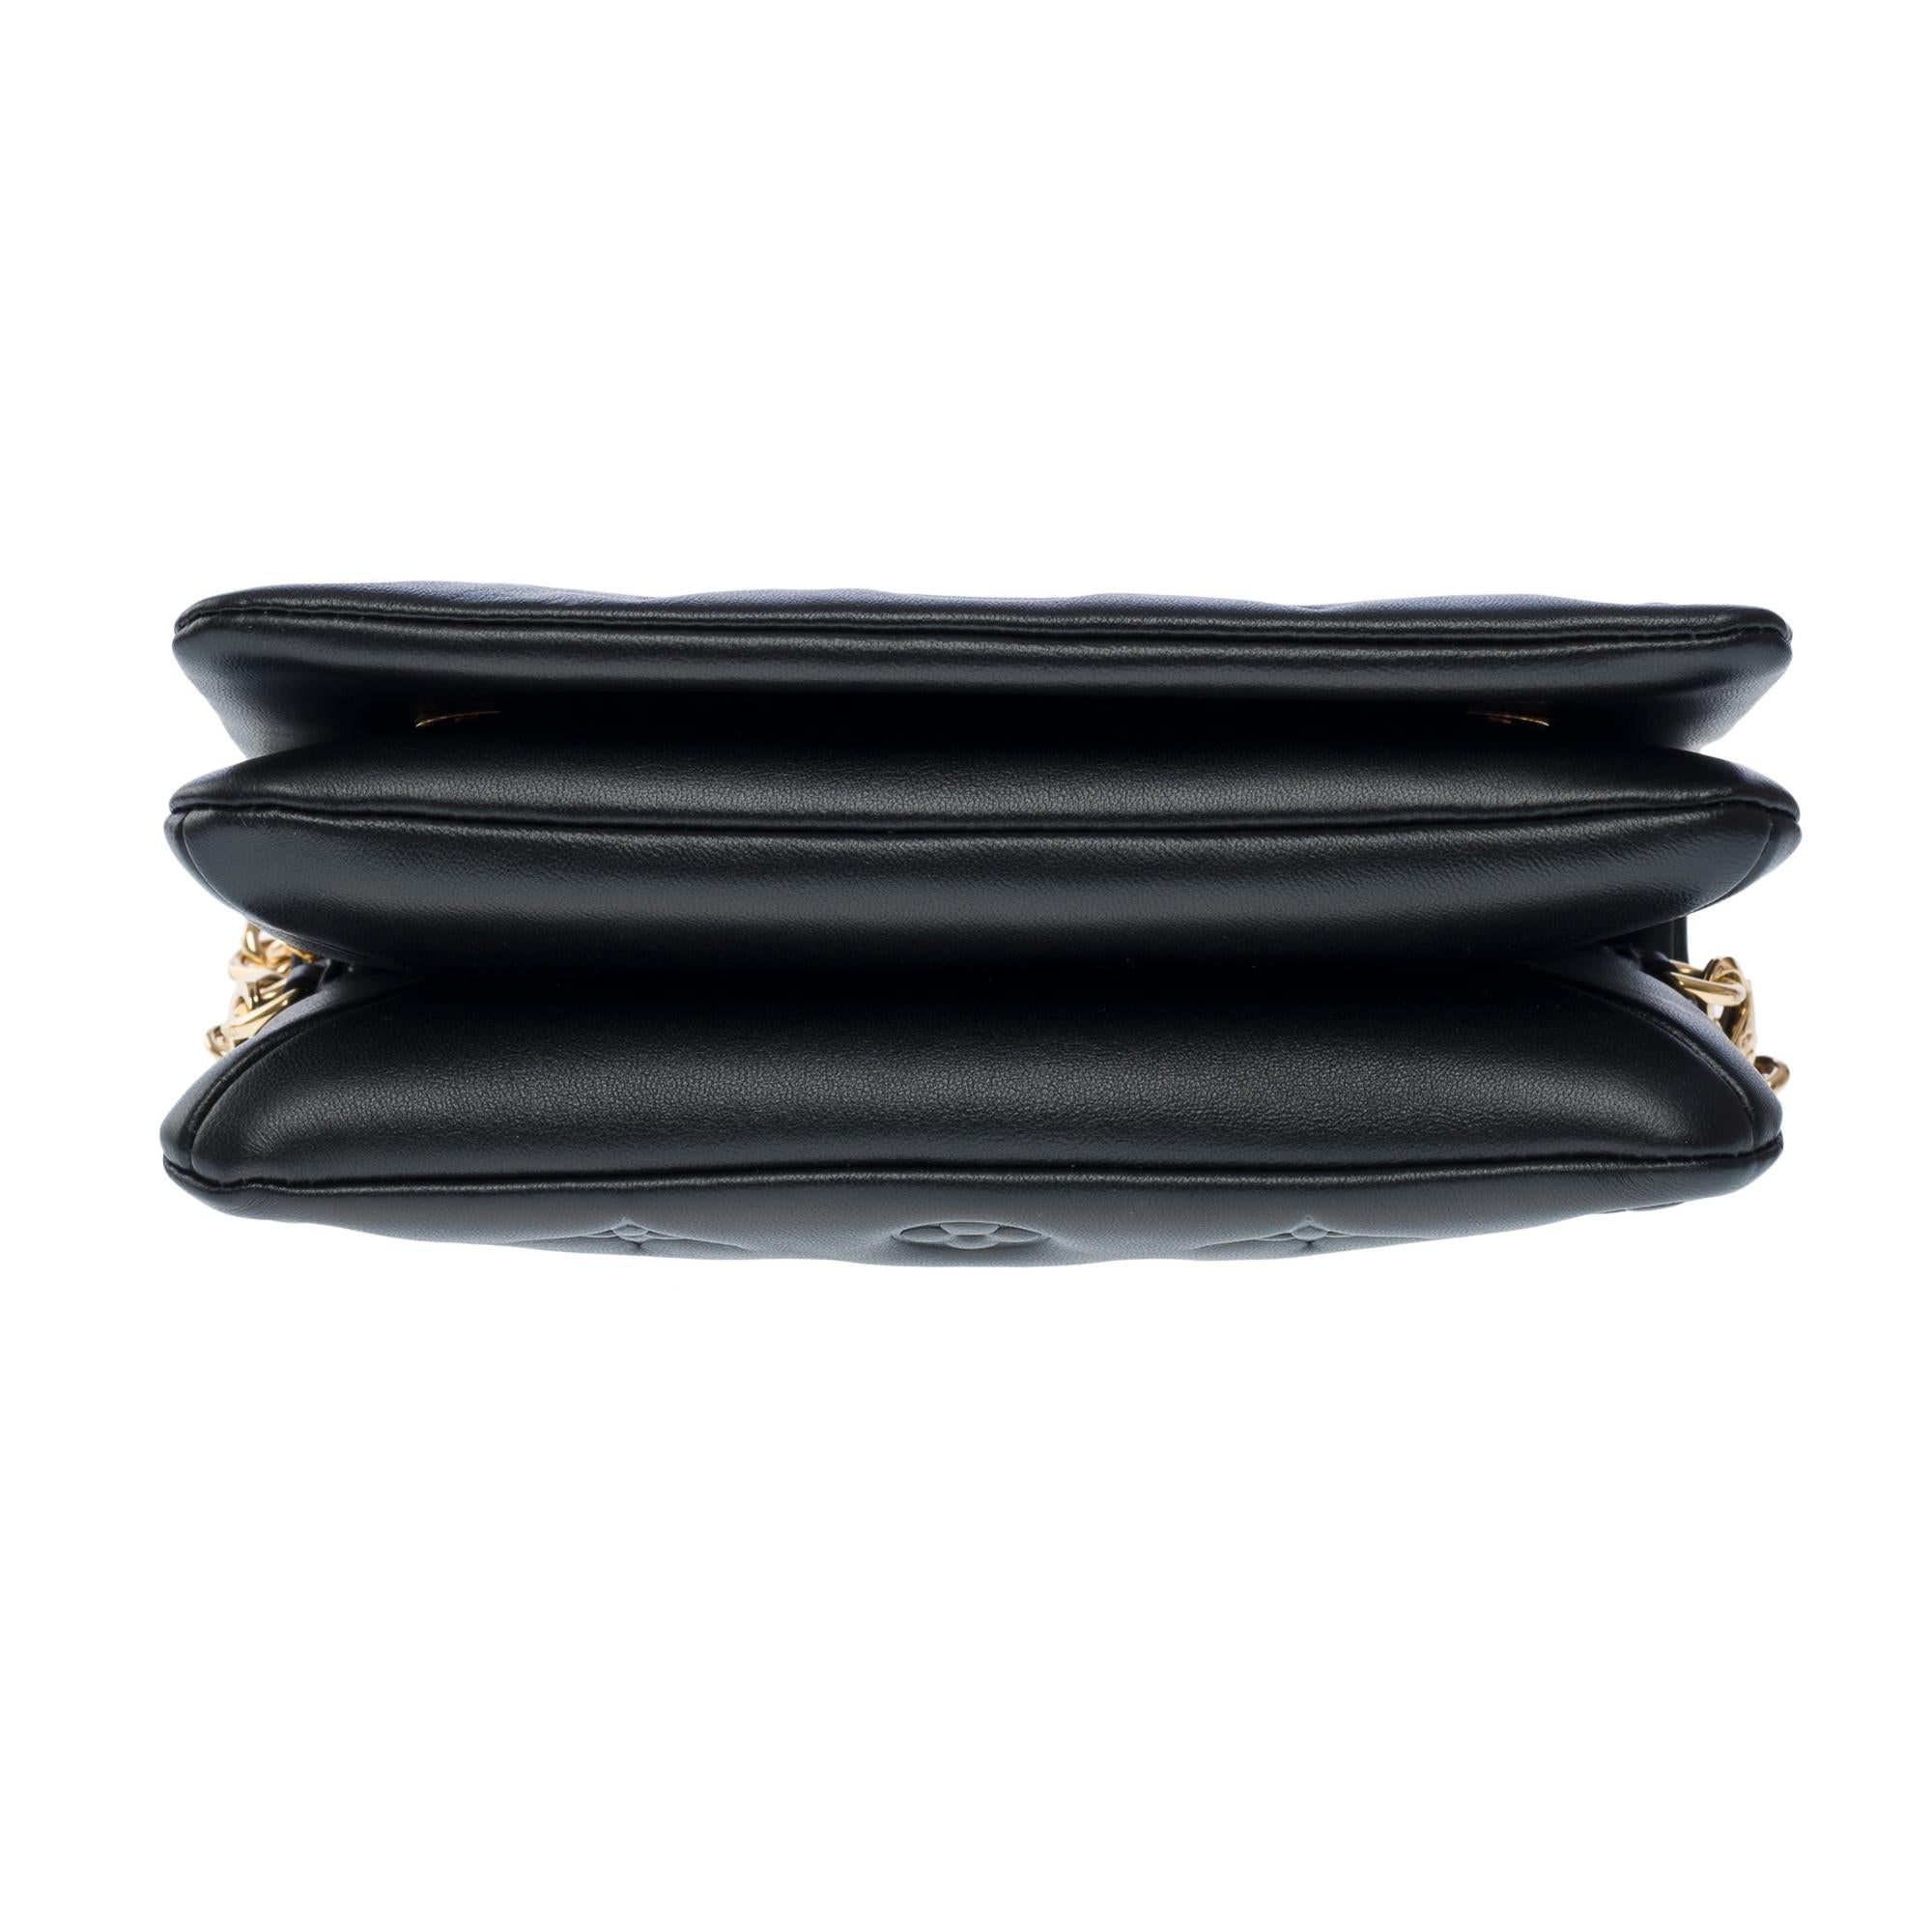 Louis Vuitton Cushion shoulder bag in black embossed monogram lambskin, GHW 6